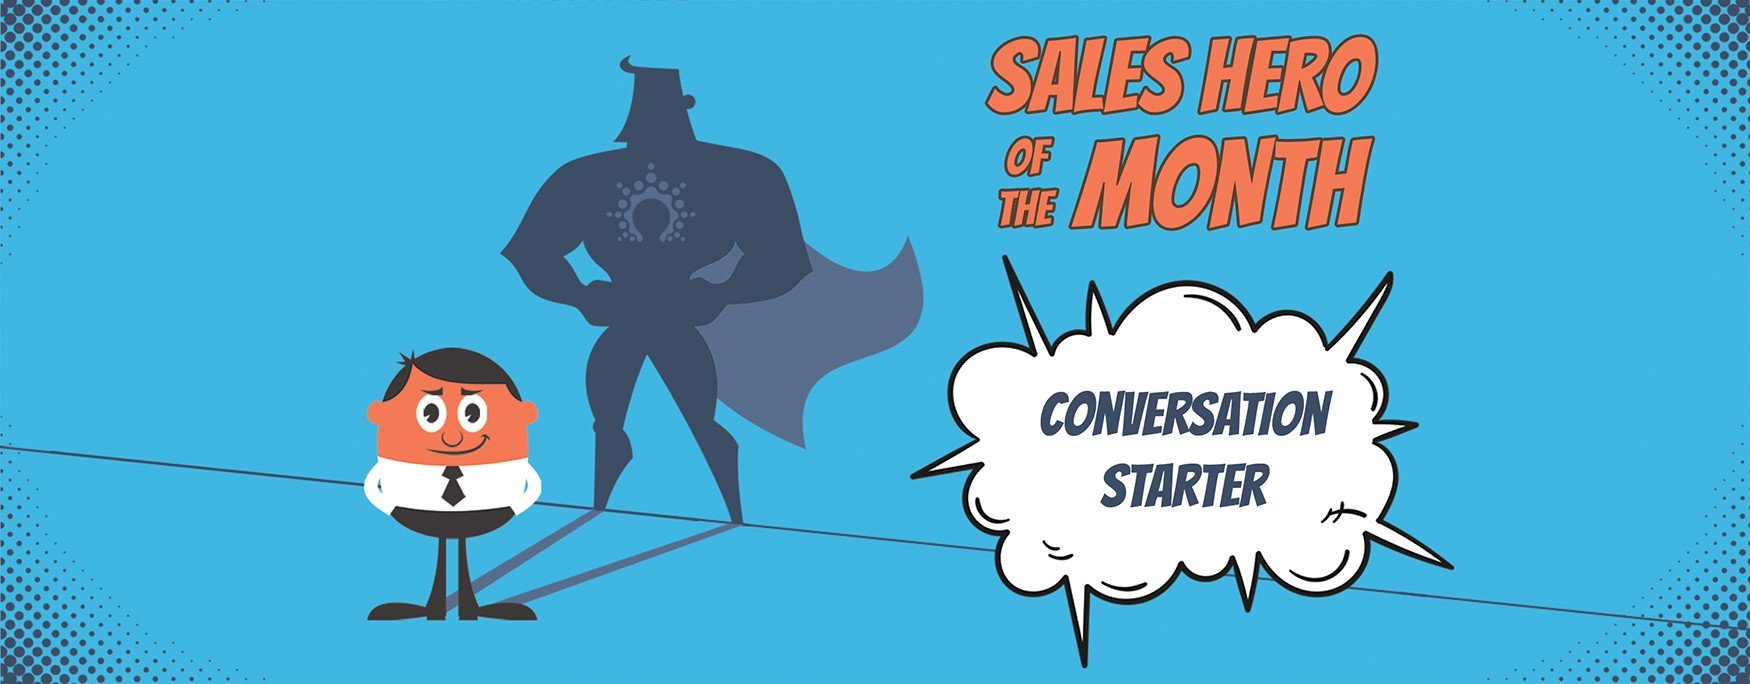 L'eroe delle vendite del mese - Conversation Starter